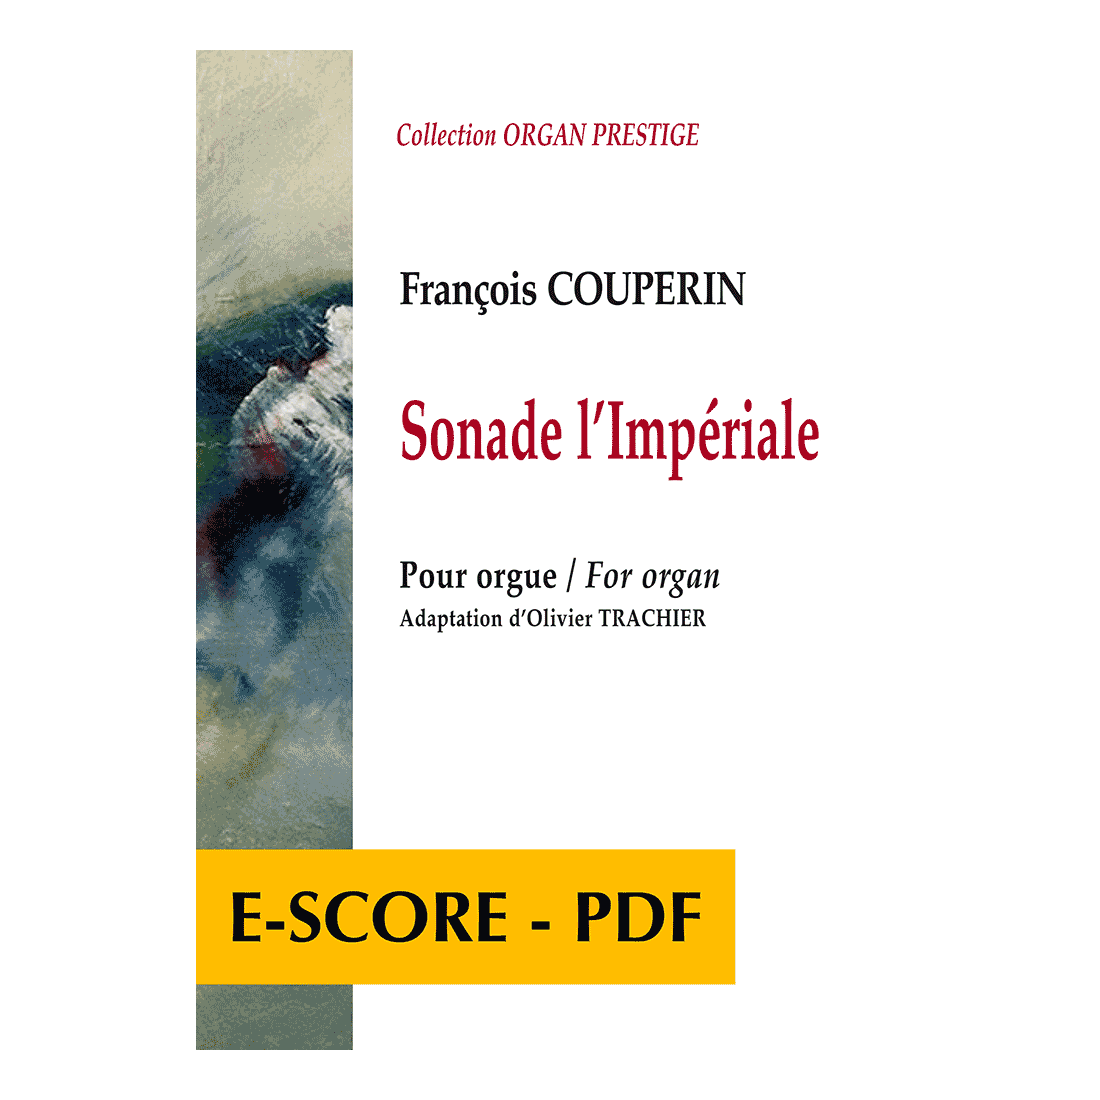 Sonade l'impériale für Orgel - E-score PDF